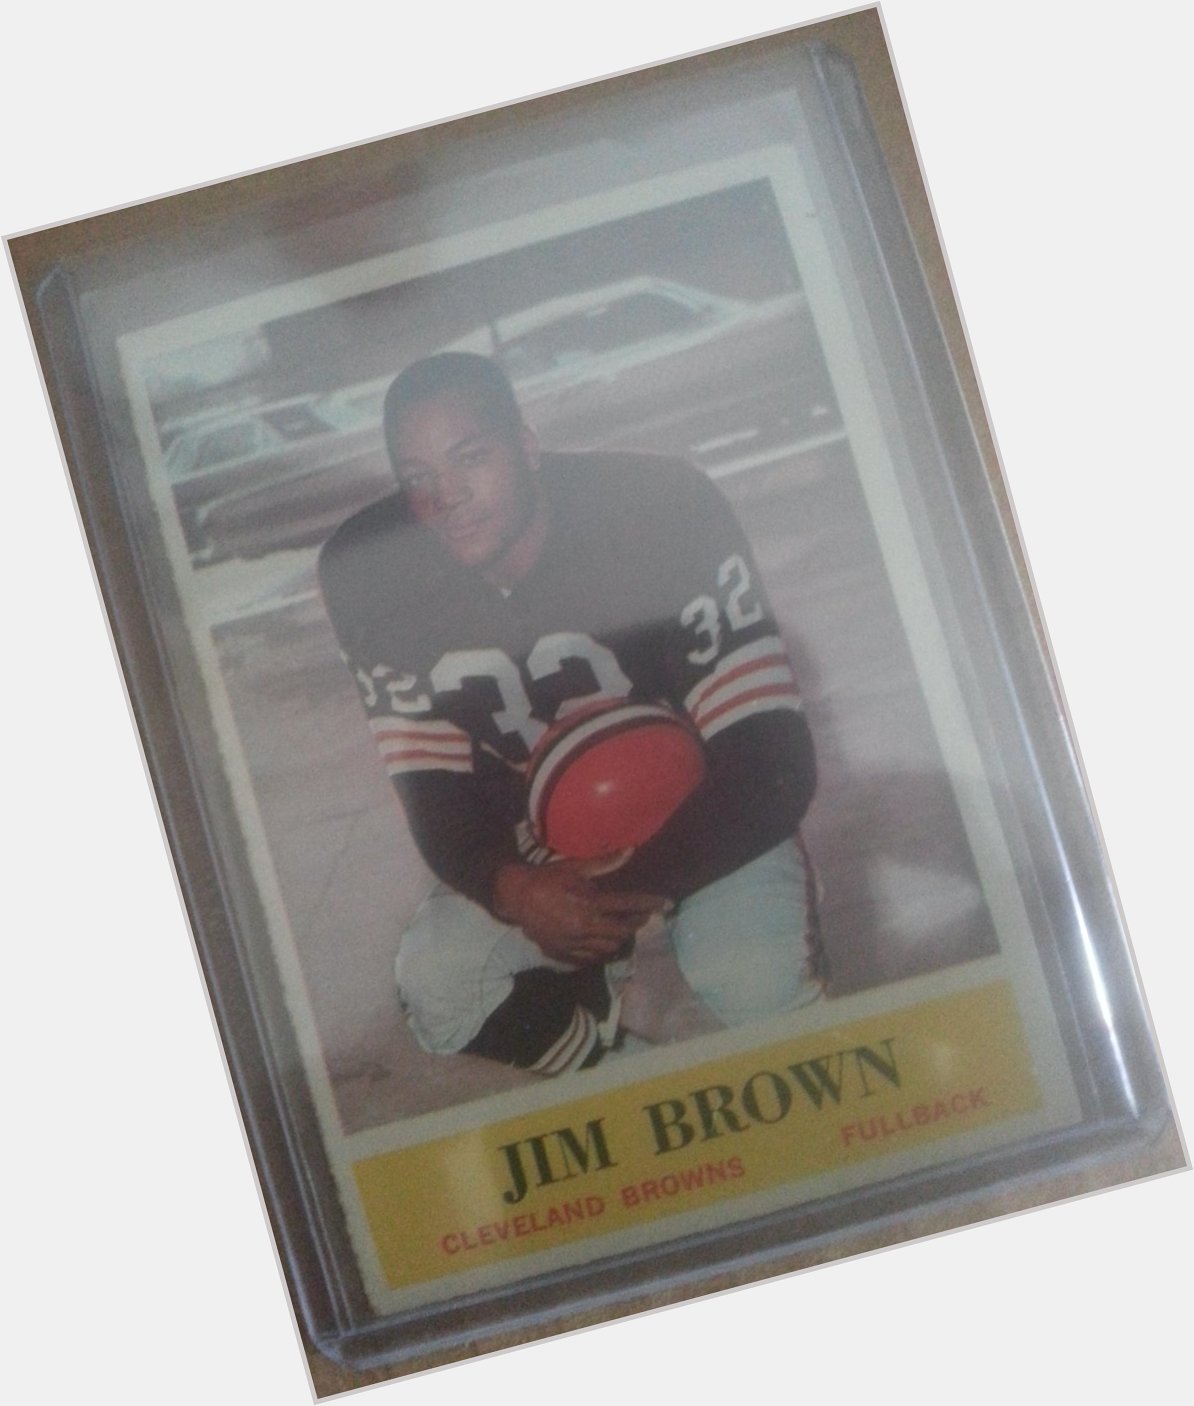 Happy birthday Jim Brown! 